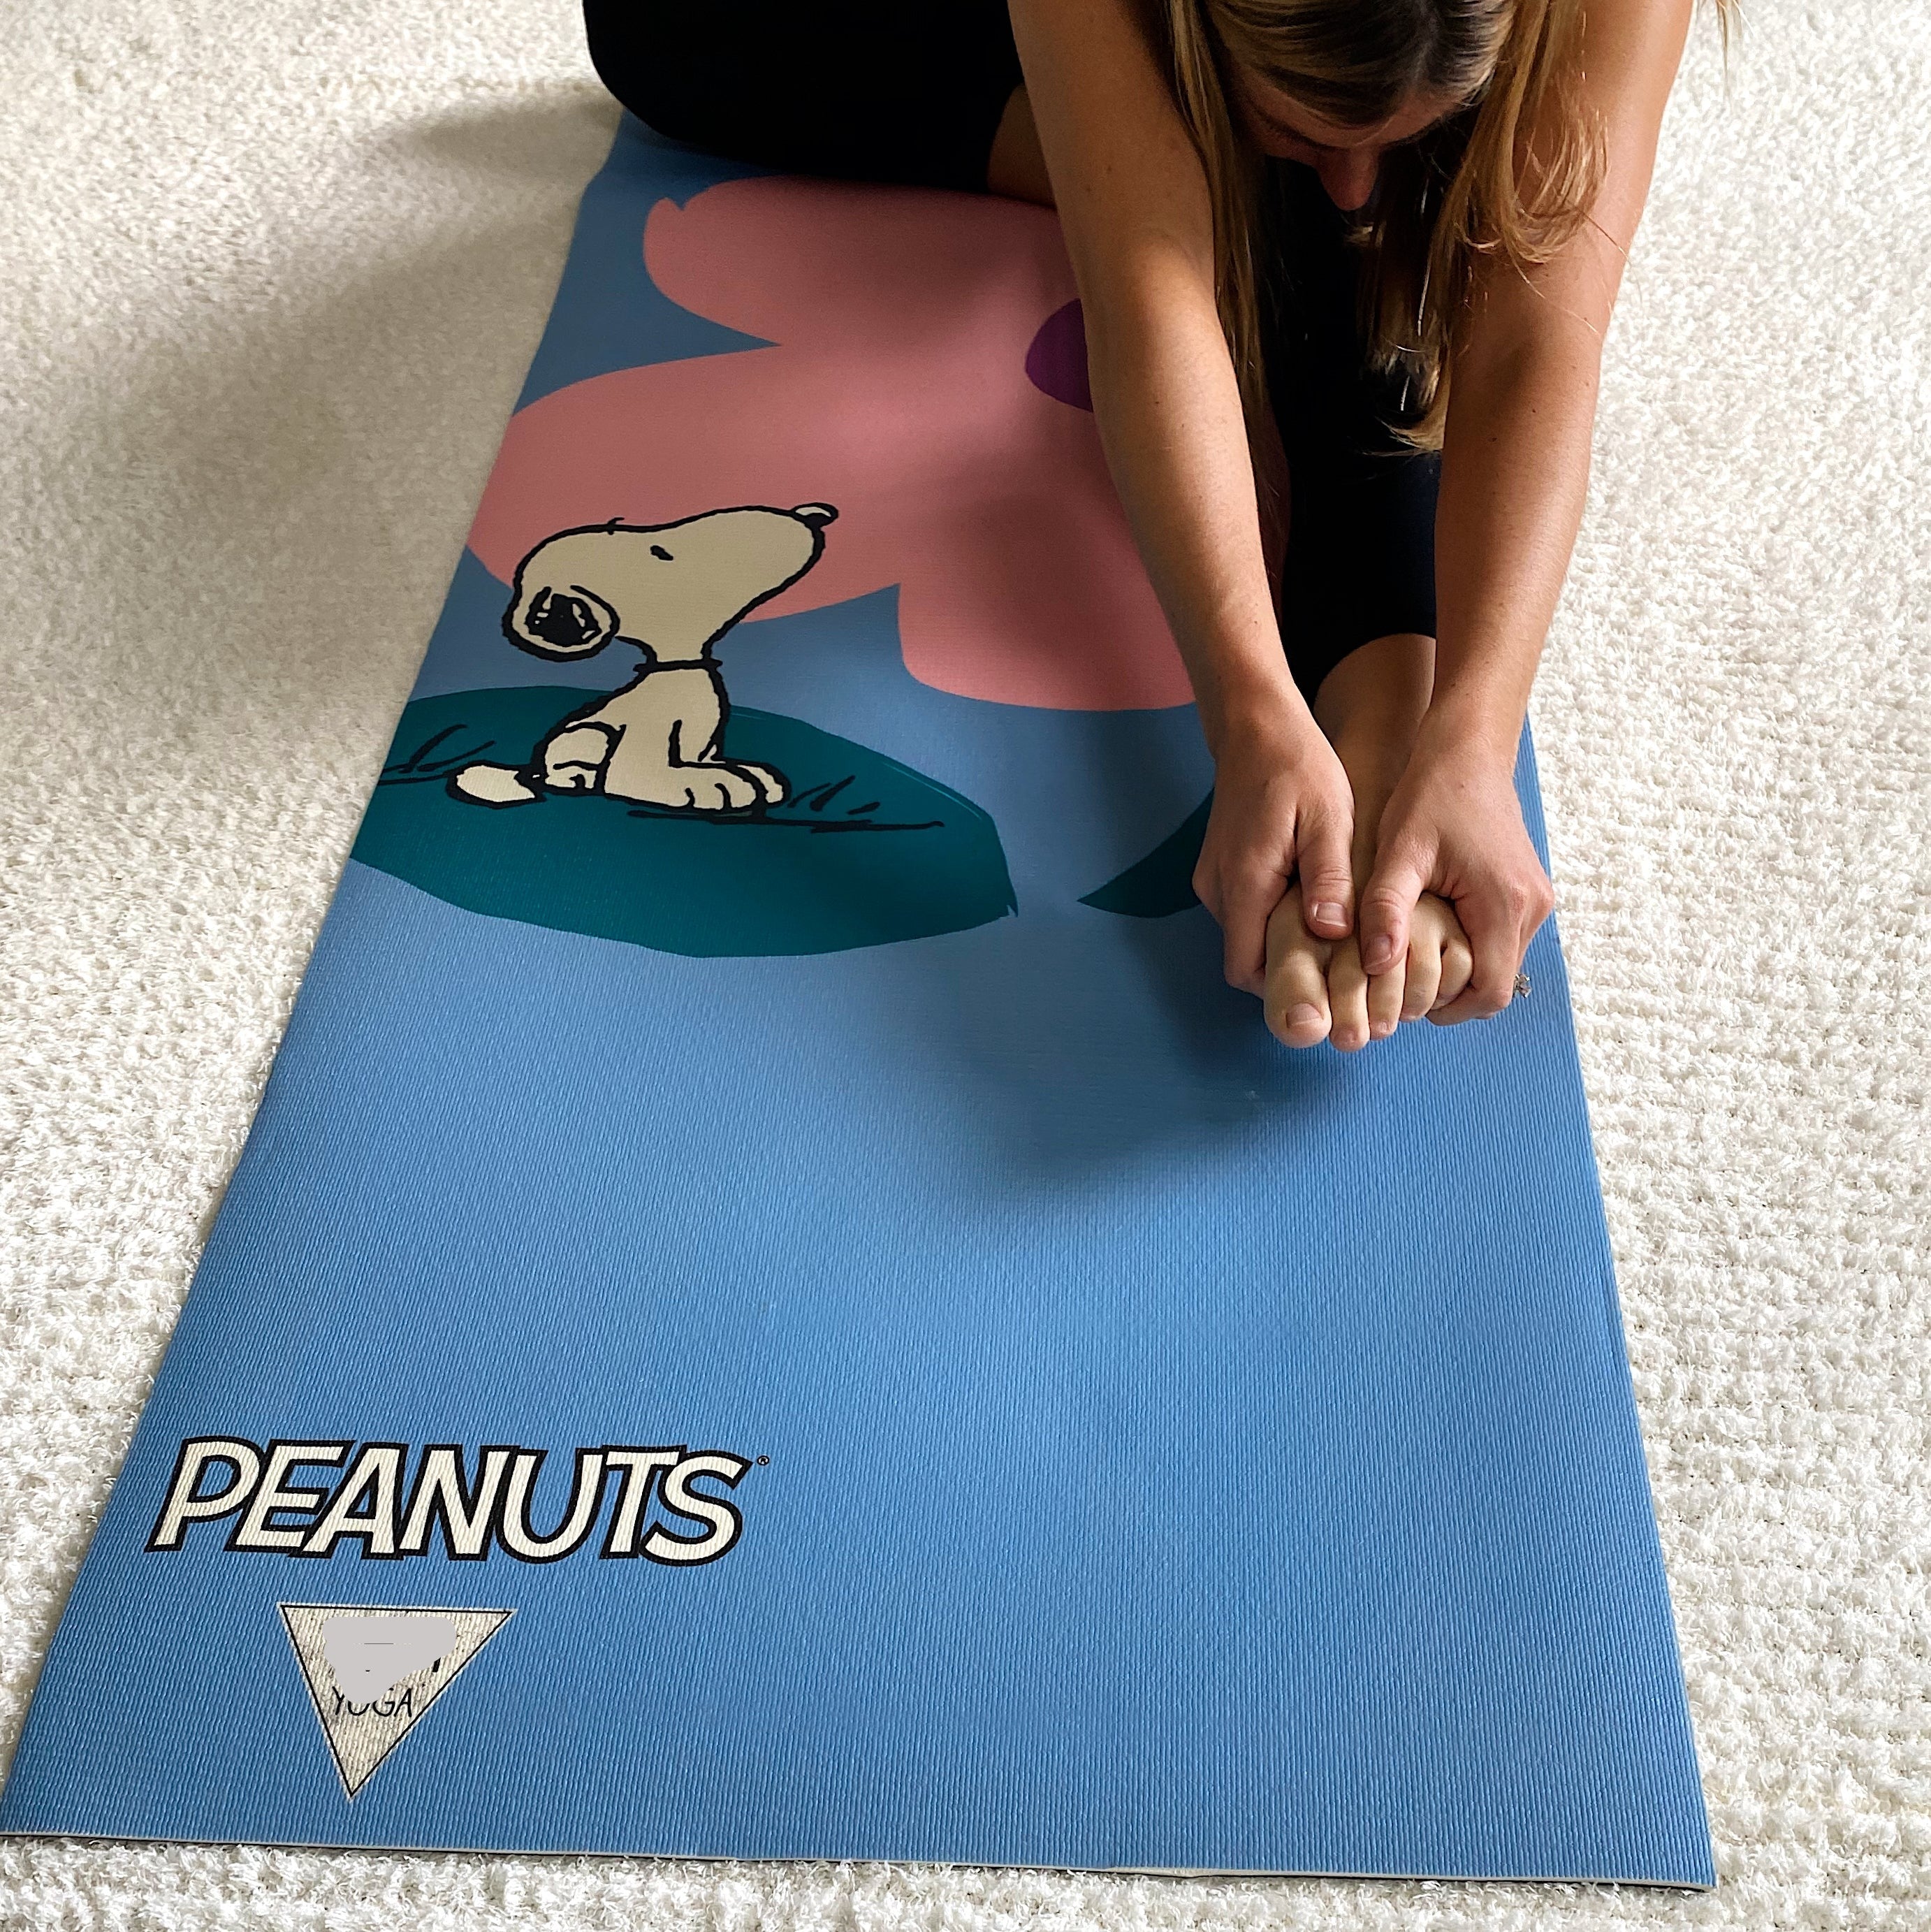 Peanuts x Yune Yoga Snoopy Yoga Mat, Yune Yoga Mats